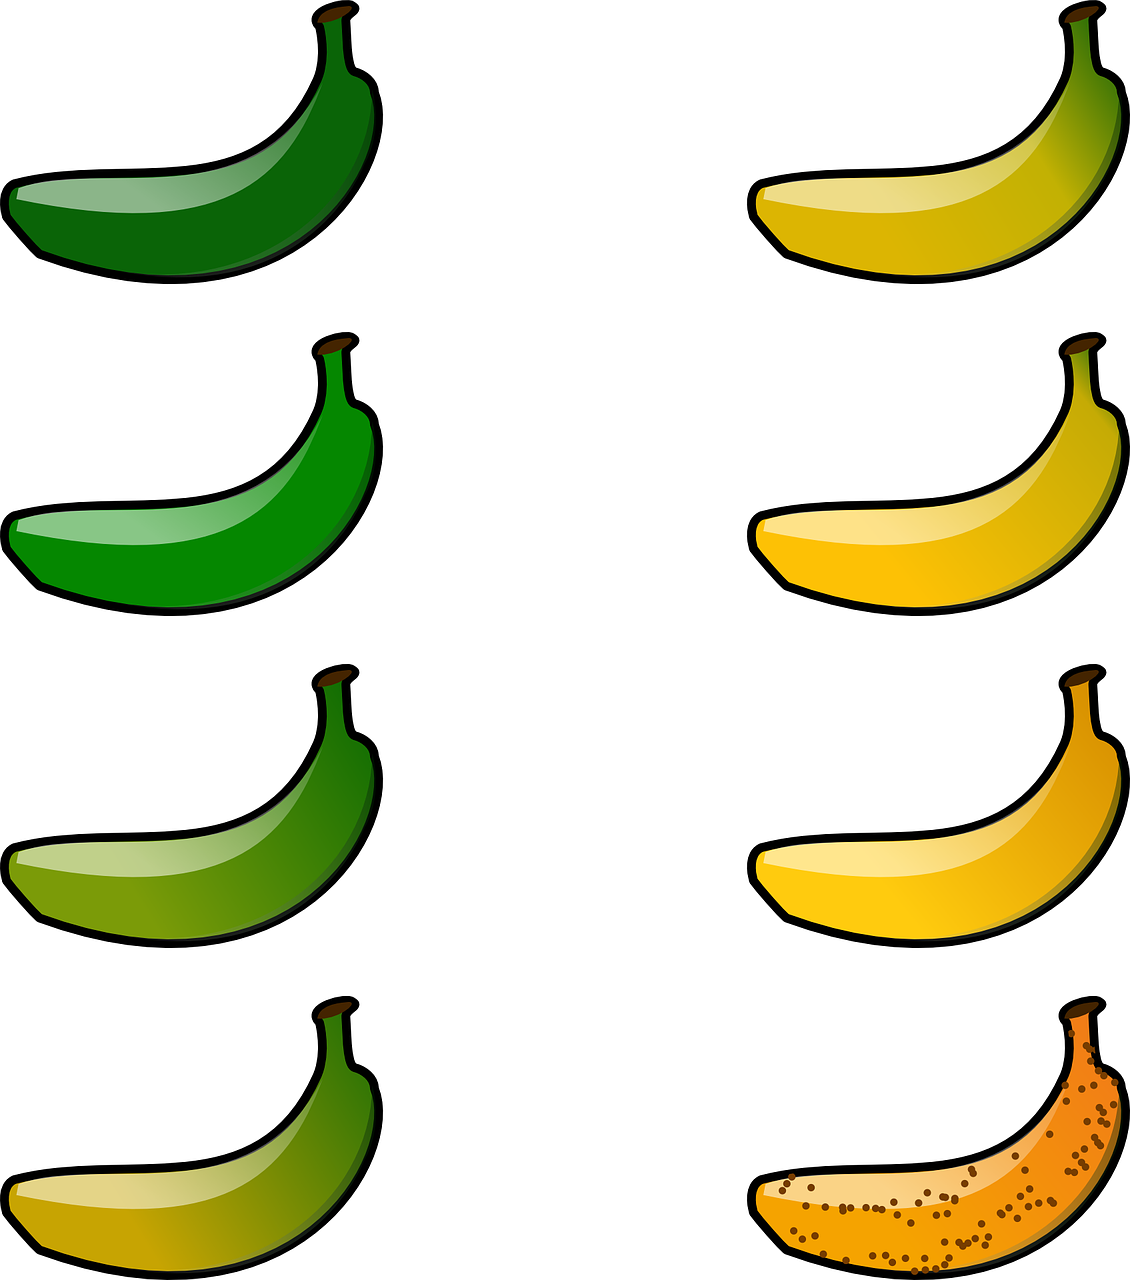 Banana,degree Of - 10 Bananas Clipart (1130x1280)